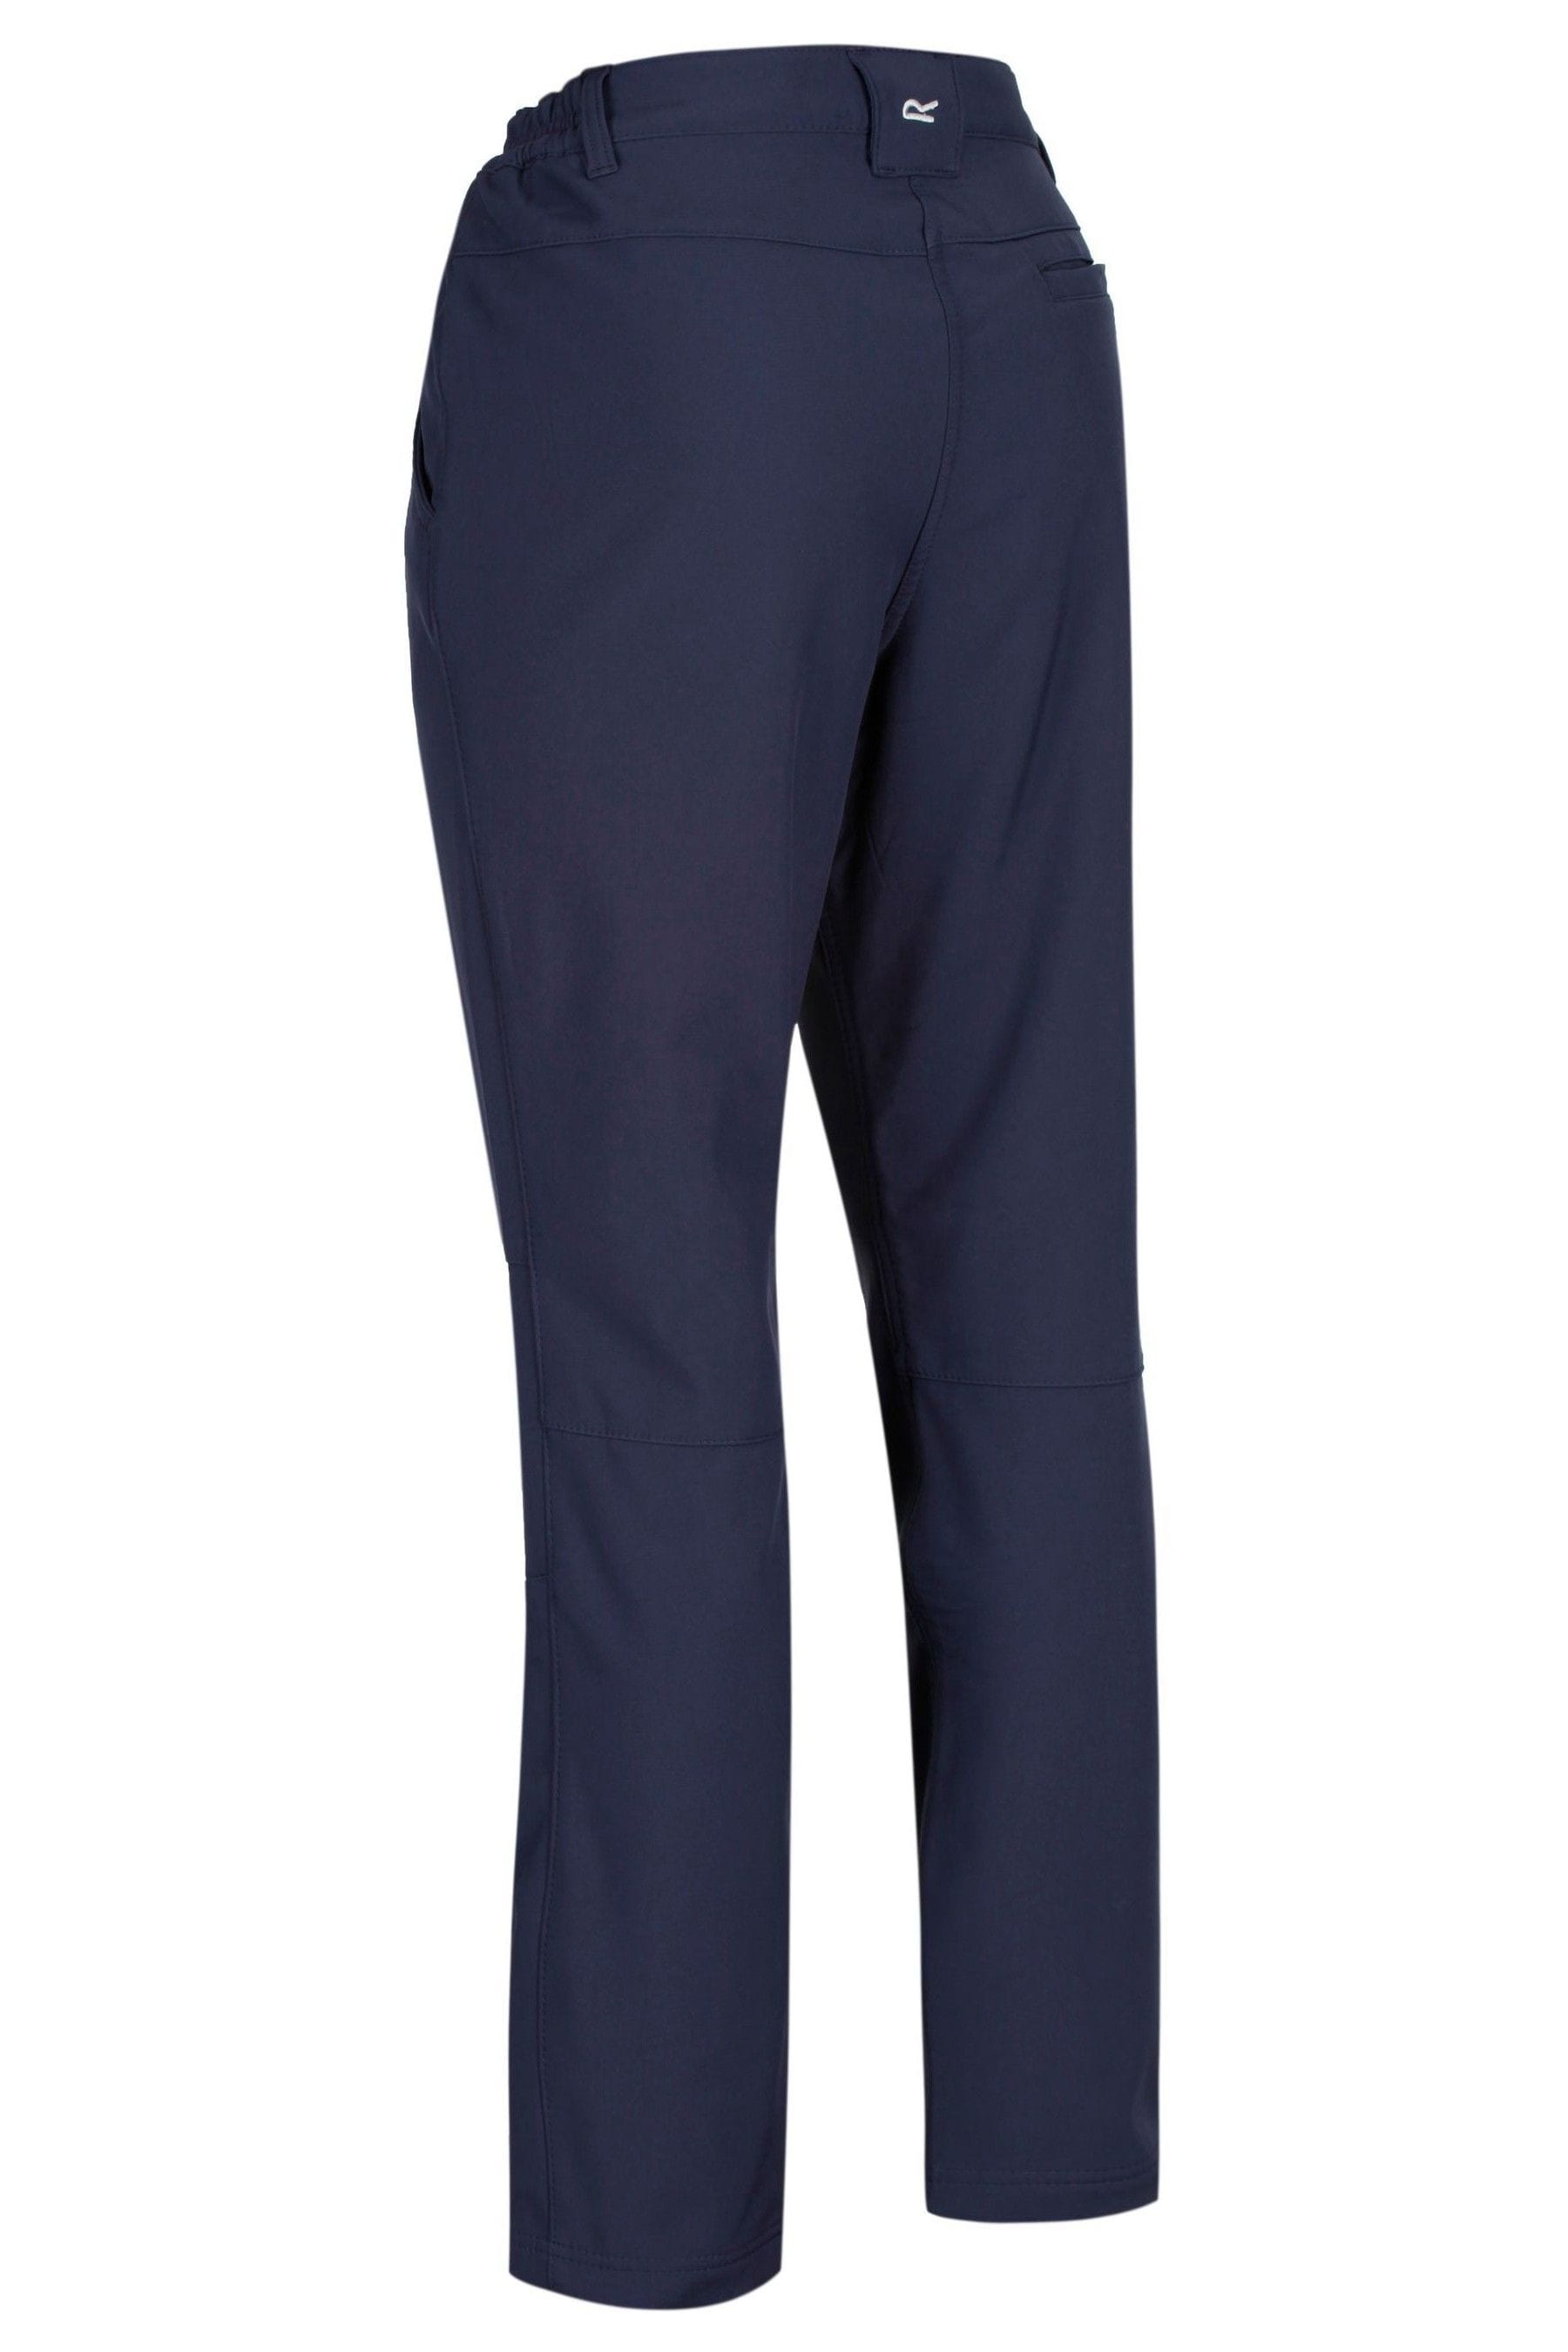 Buy Regatta Blue Womens Fenton Softshell Trousers from the Next UK ...